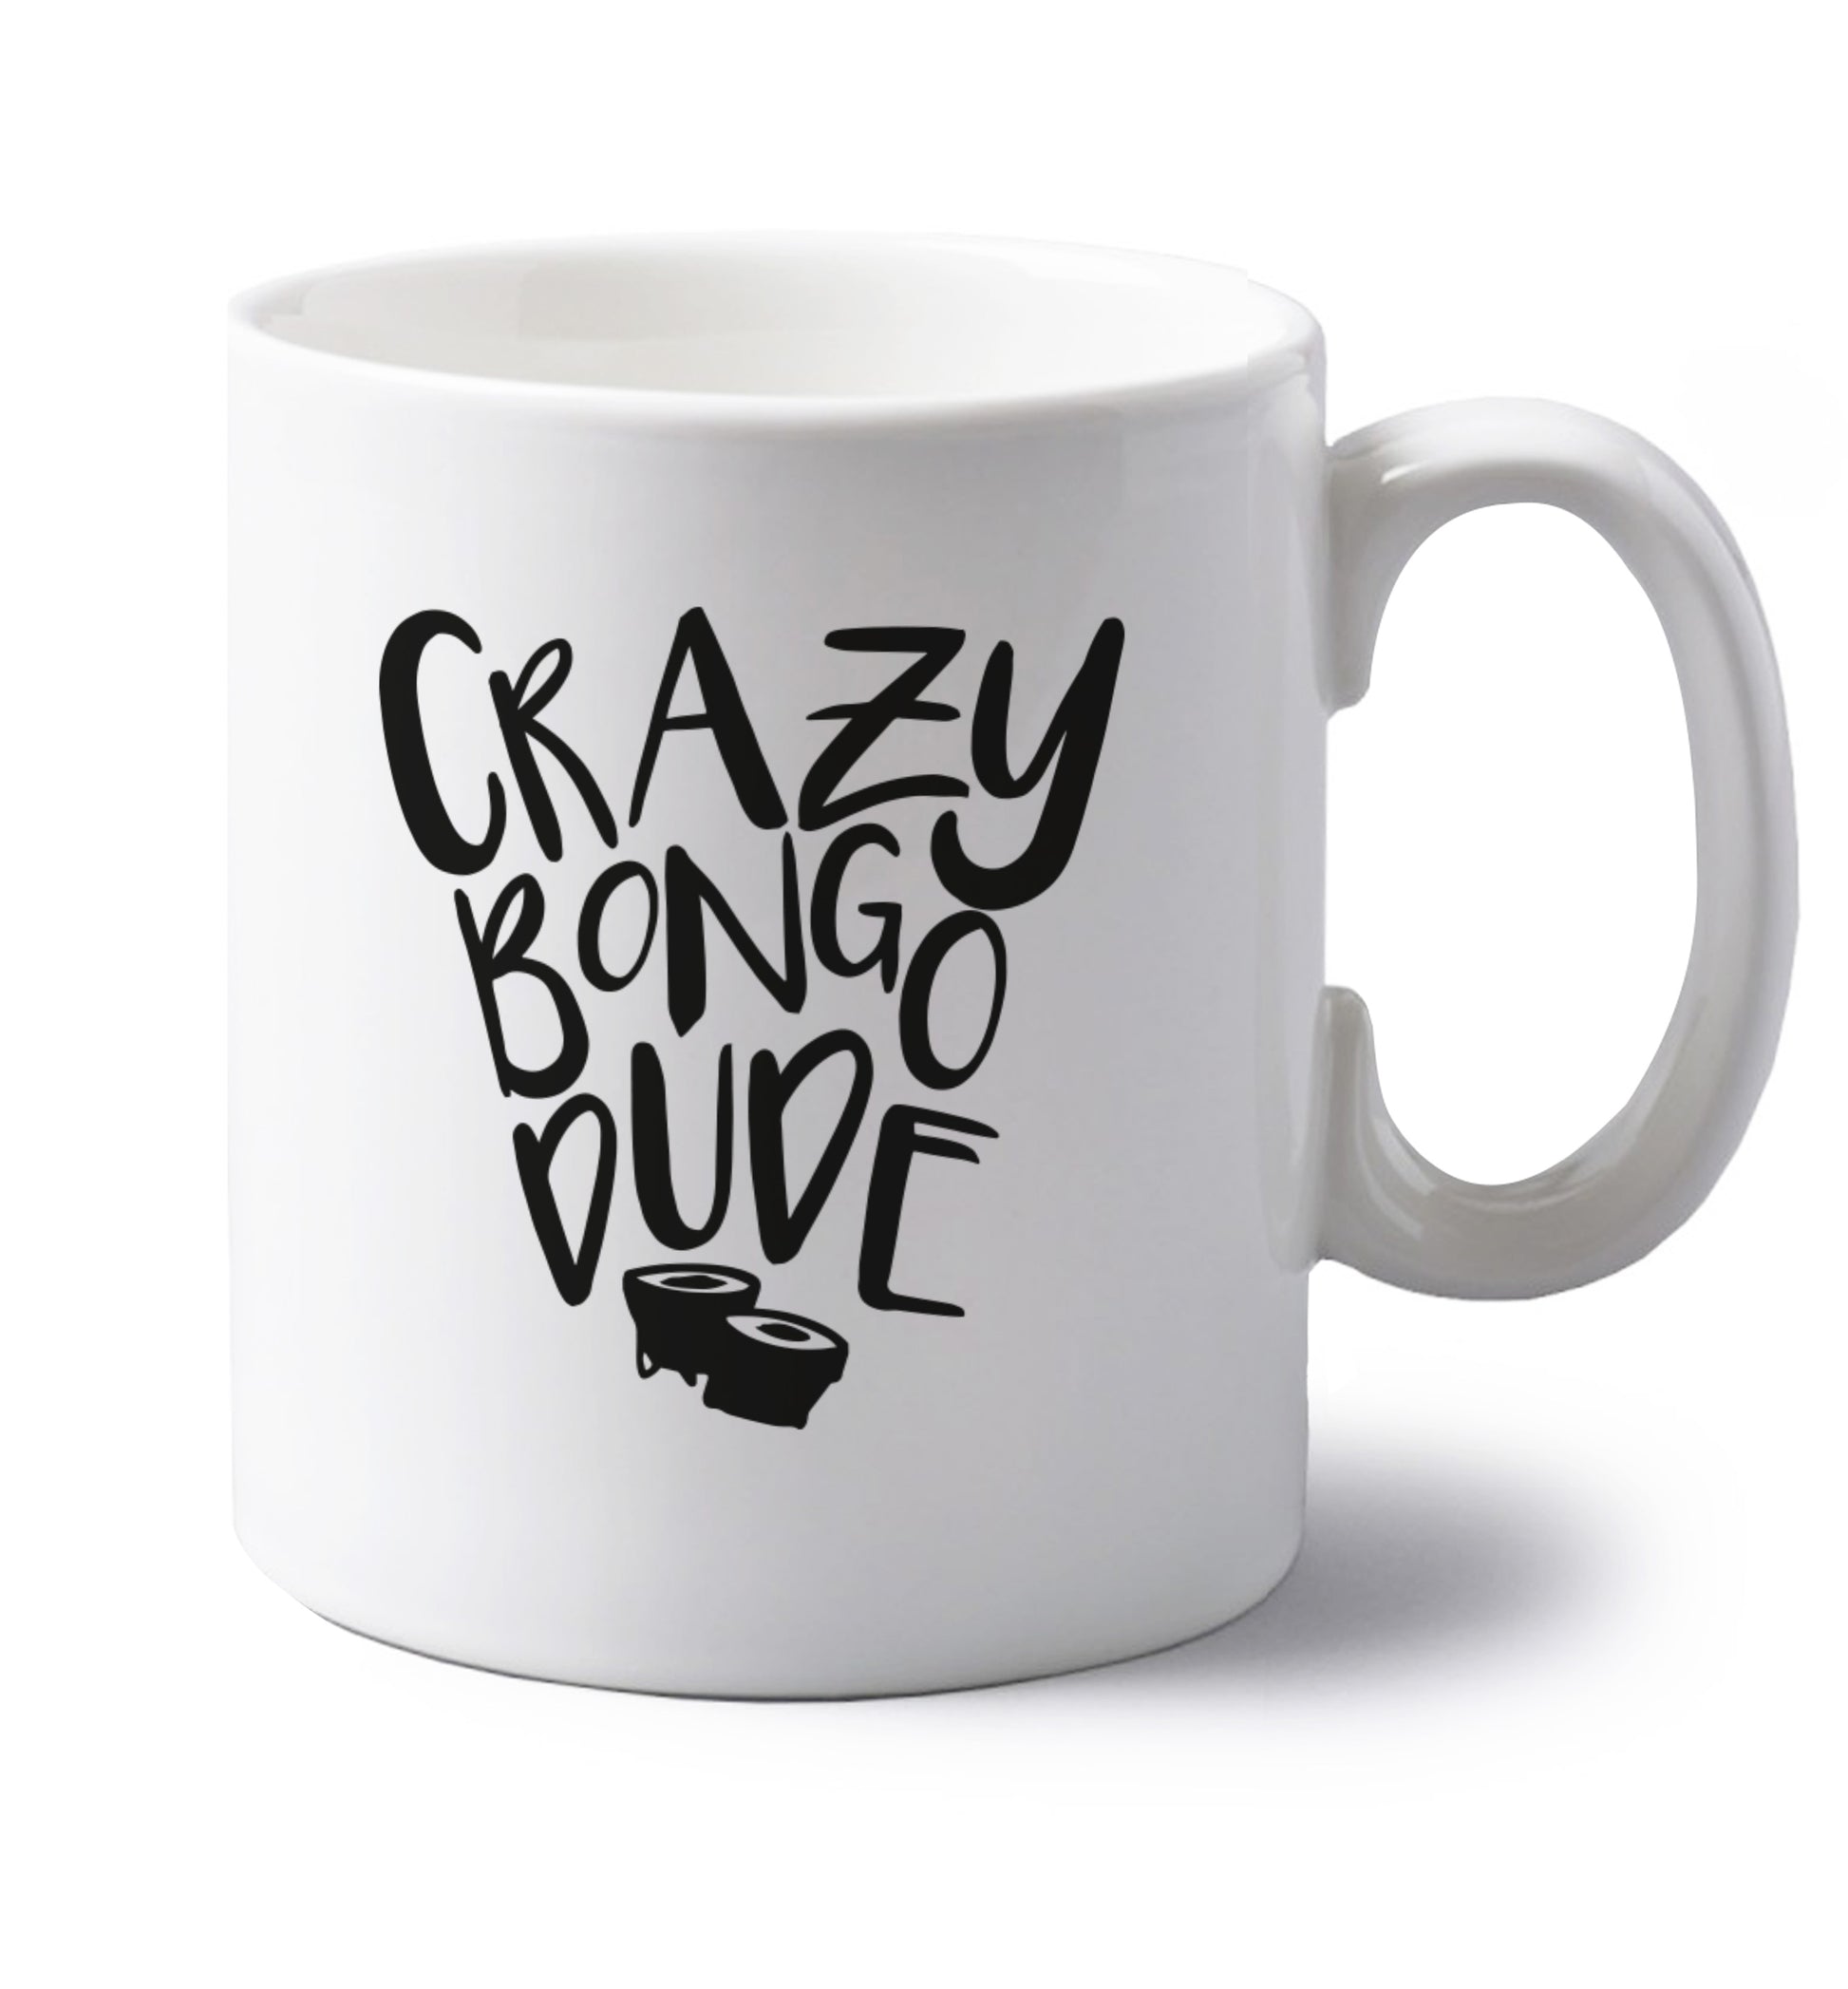 Crazy bongo dude left handed white ceramic mug 